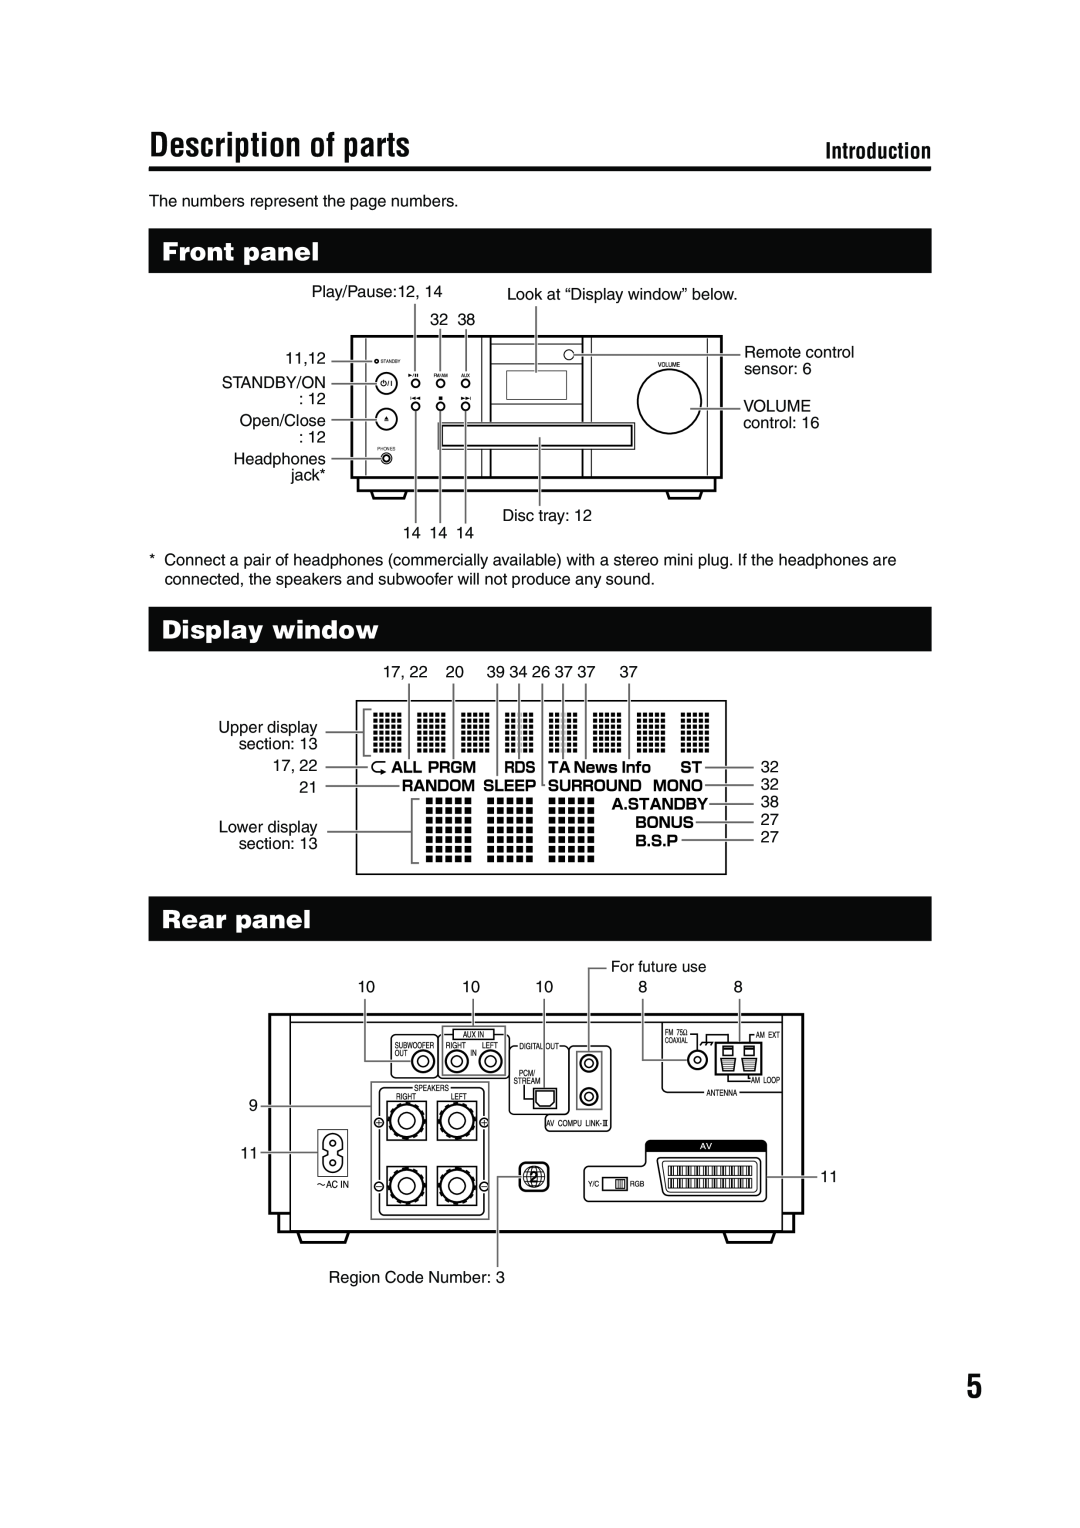 JVC LVT1284-004B manual Description of parts, Front panel, Display window, Rear panel, Introduction 